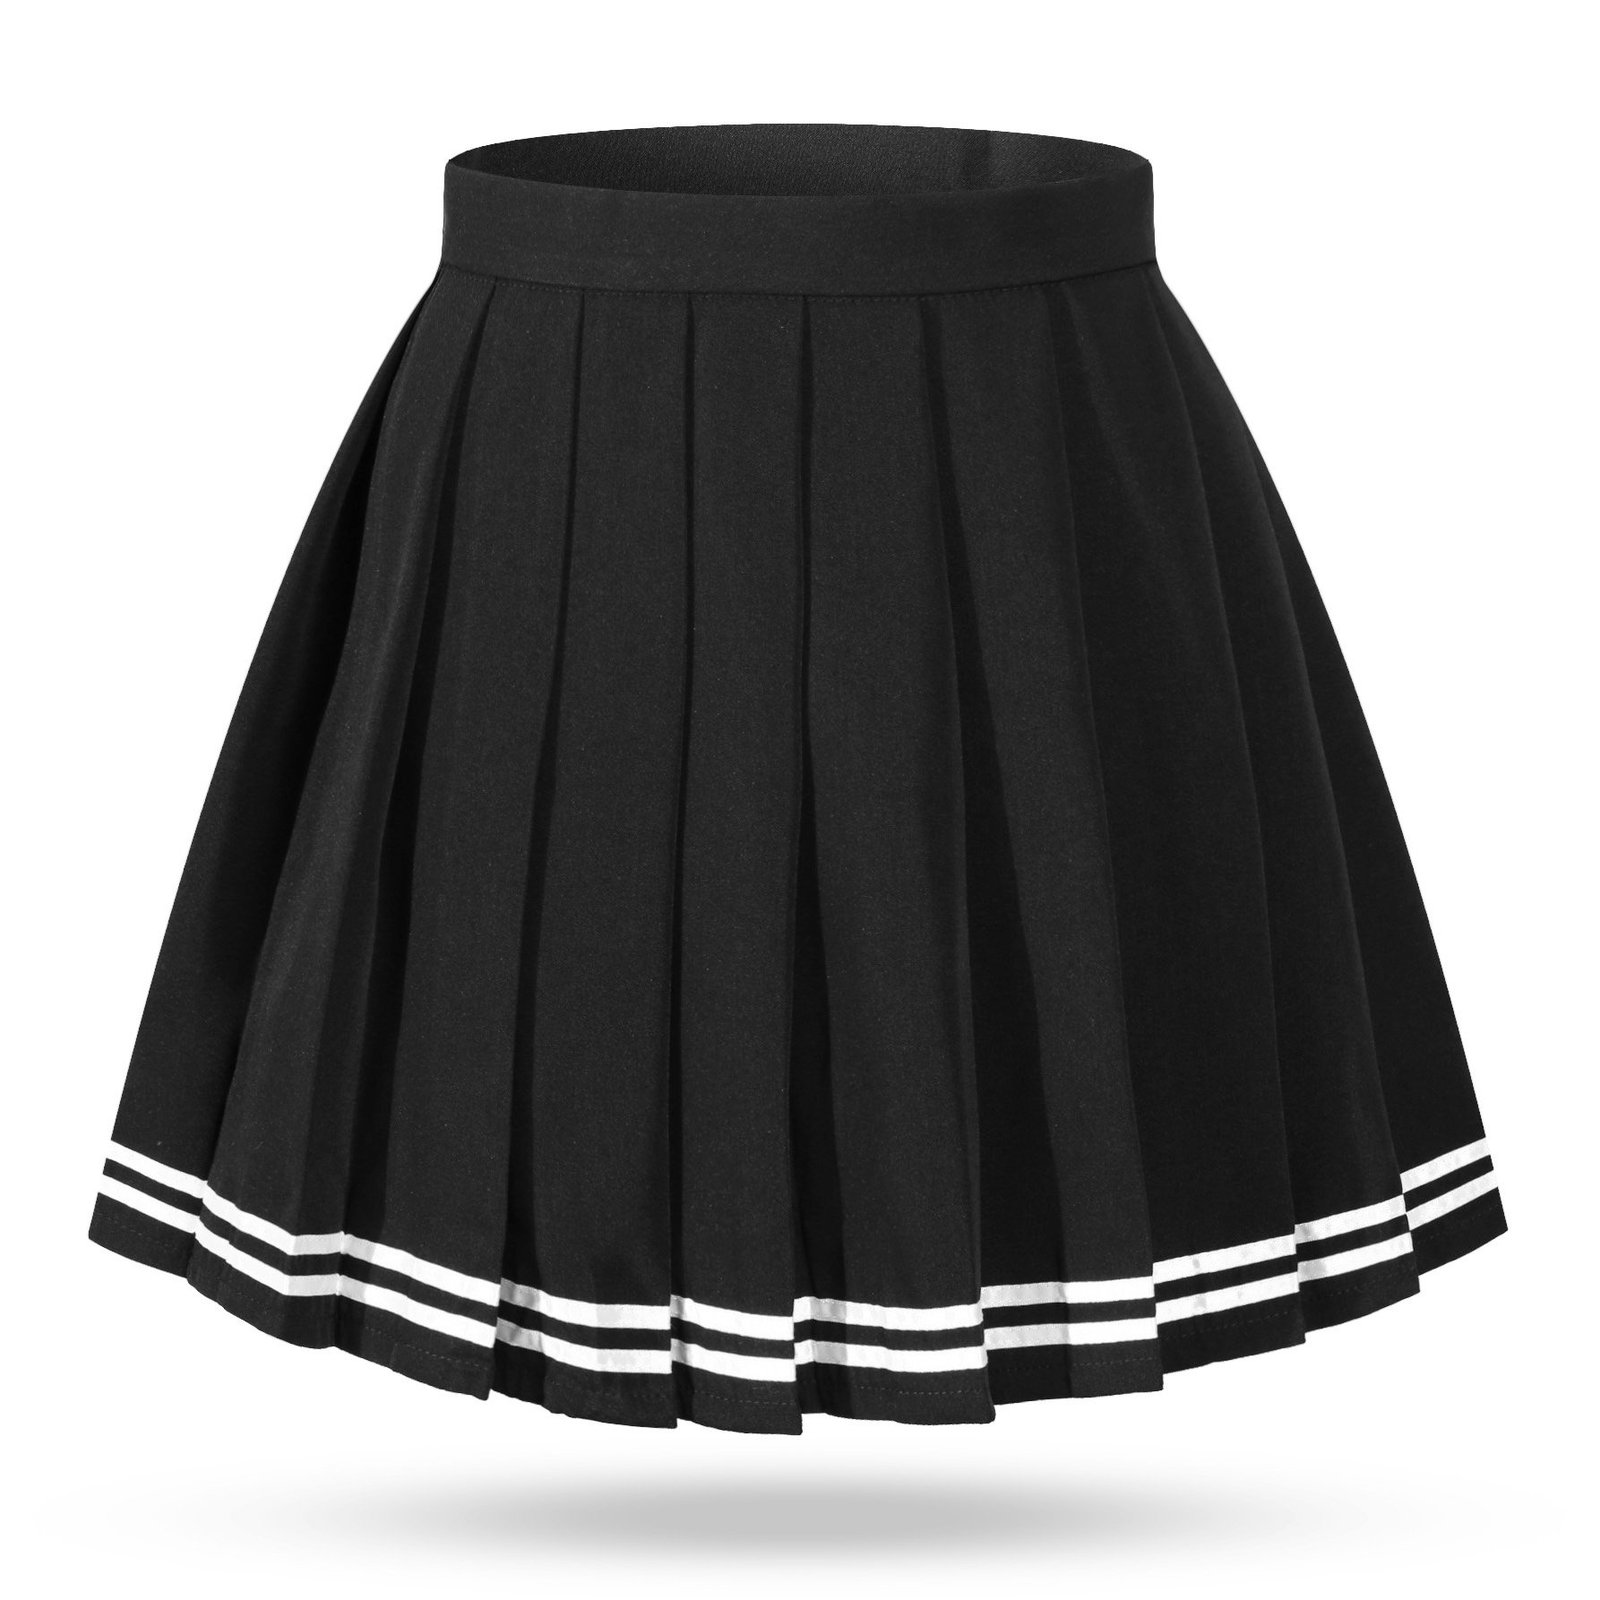 Girl's Japan Pleated School Uniform Navy clothing Sexy Skirts Costumes(S,Black W